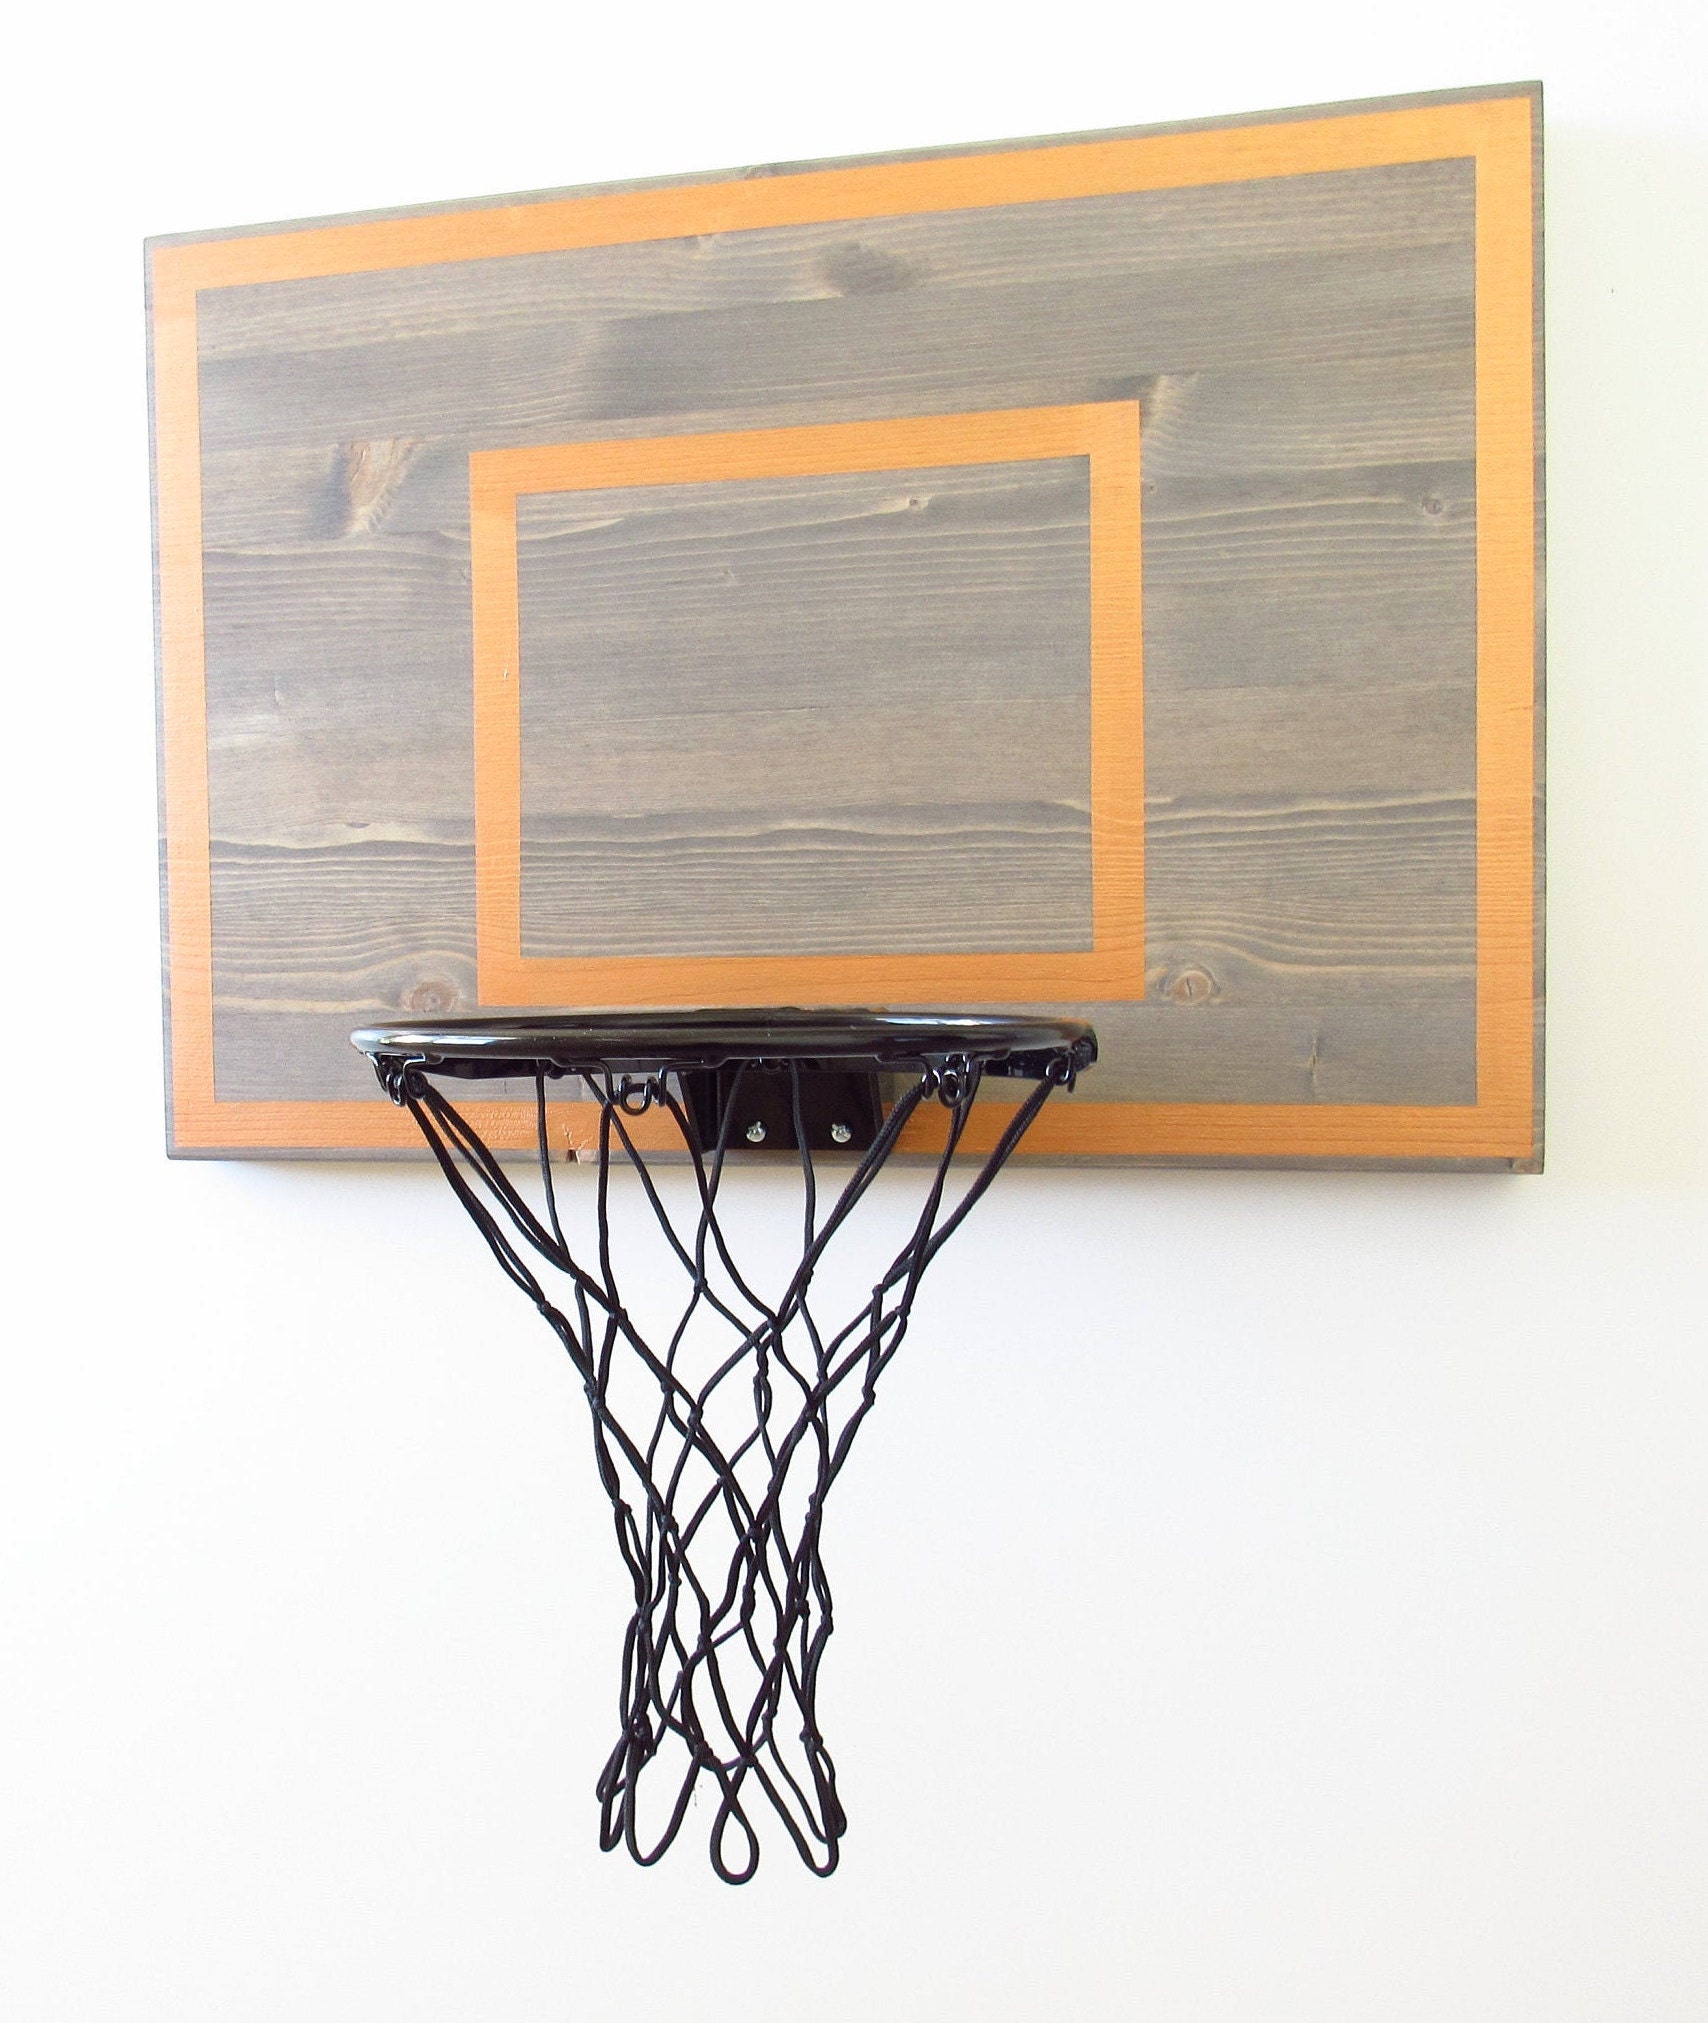 Karl home 15 in. x 12 in. Over-The-Door Mini Basketball Hoop Backboard  470621143743 - The Home Depot